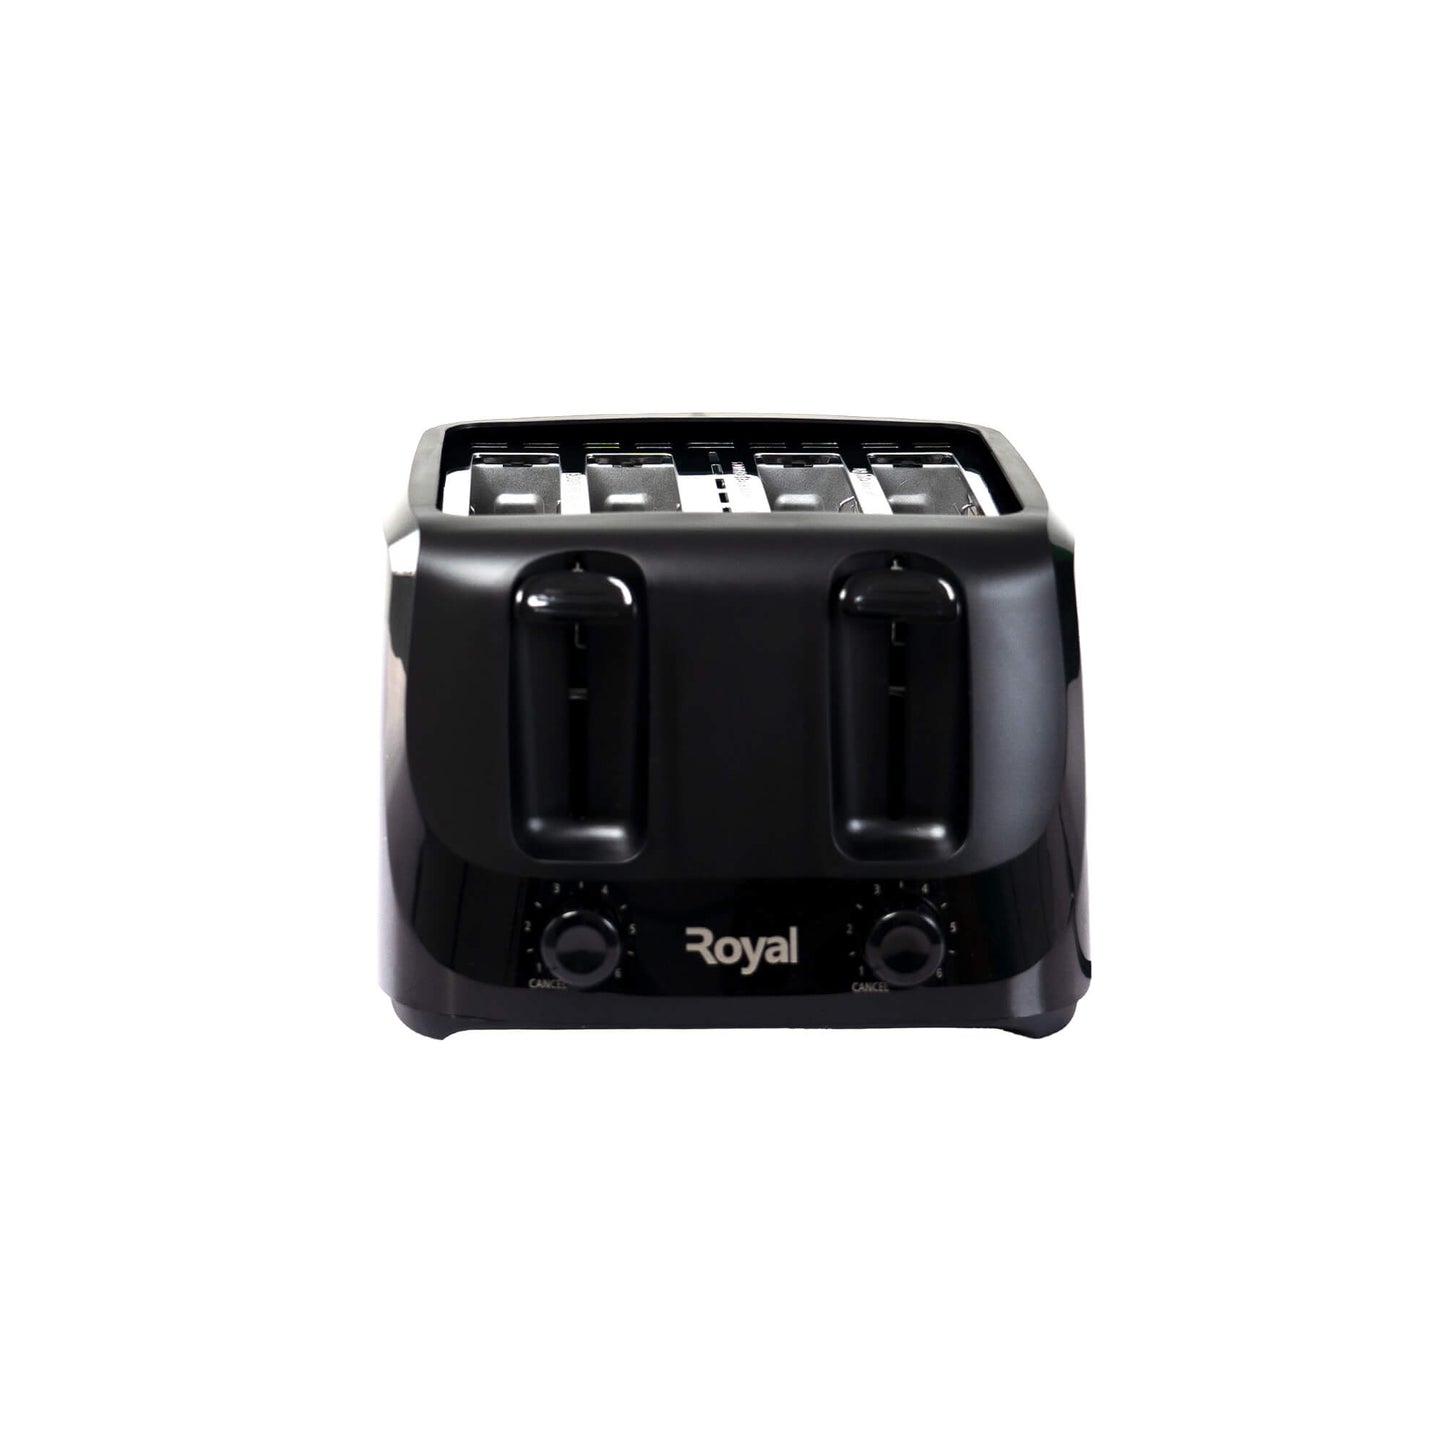 Royal 4-Slice Toaster RBTA5018-GS